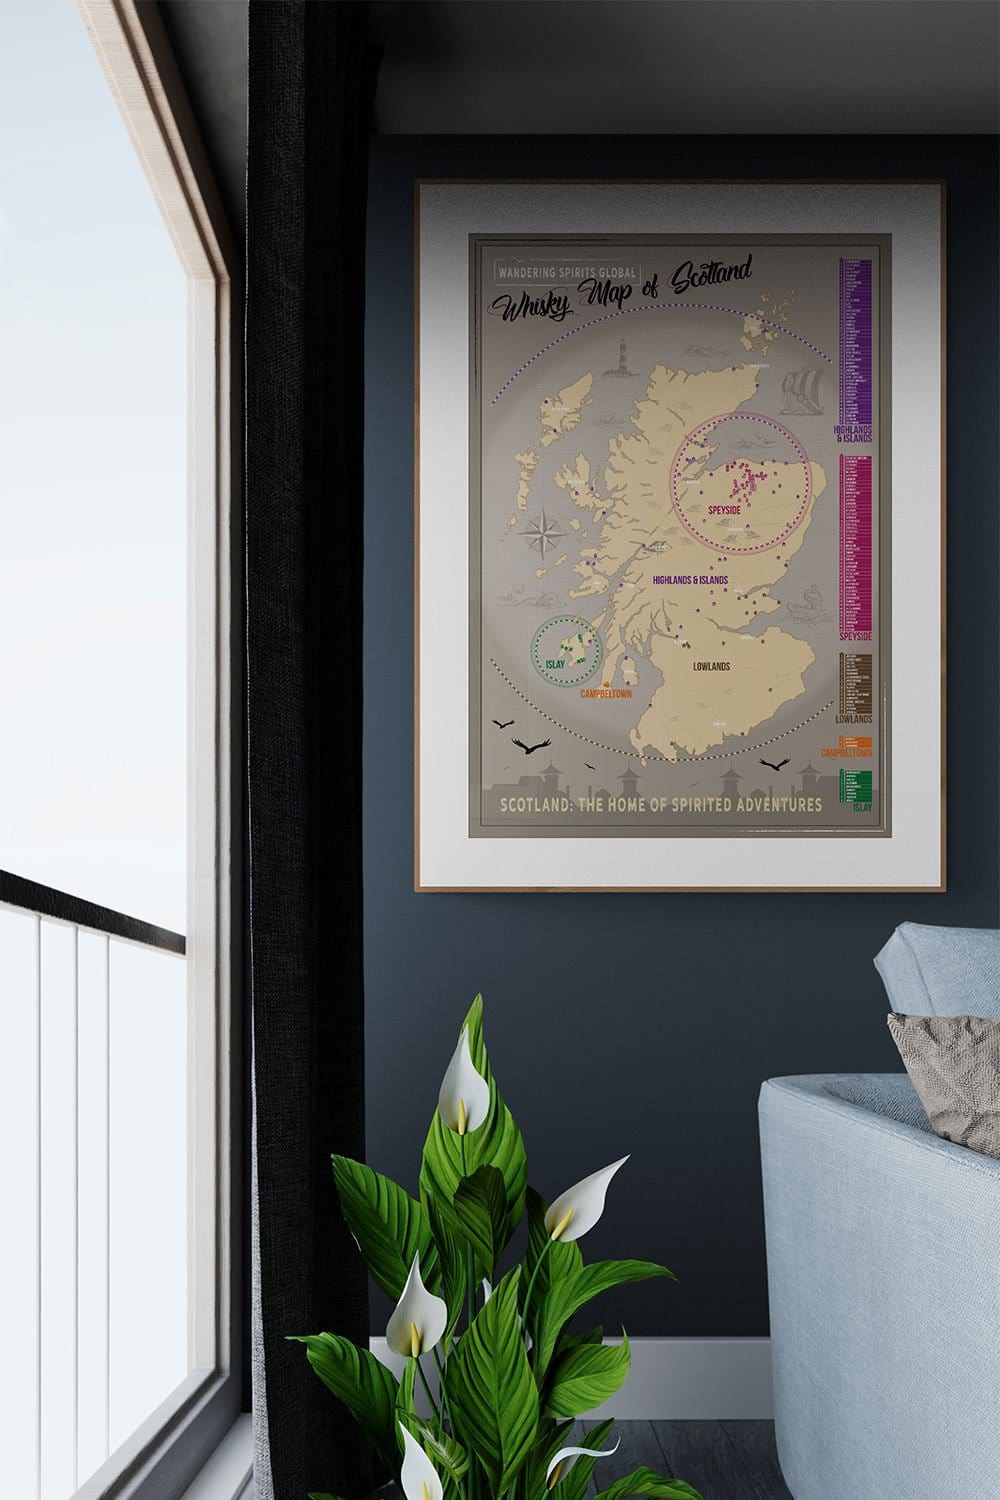 Scotland Distillery Map Fine Art Print by Wandering Spirits Global